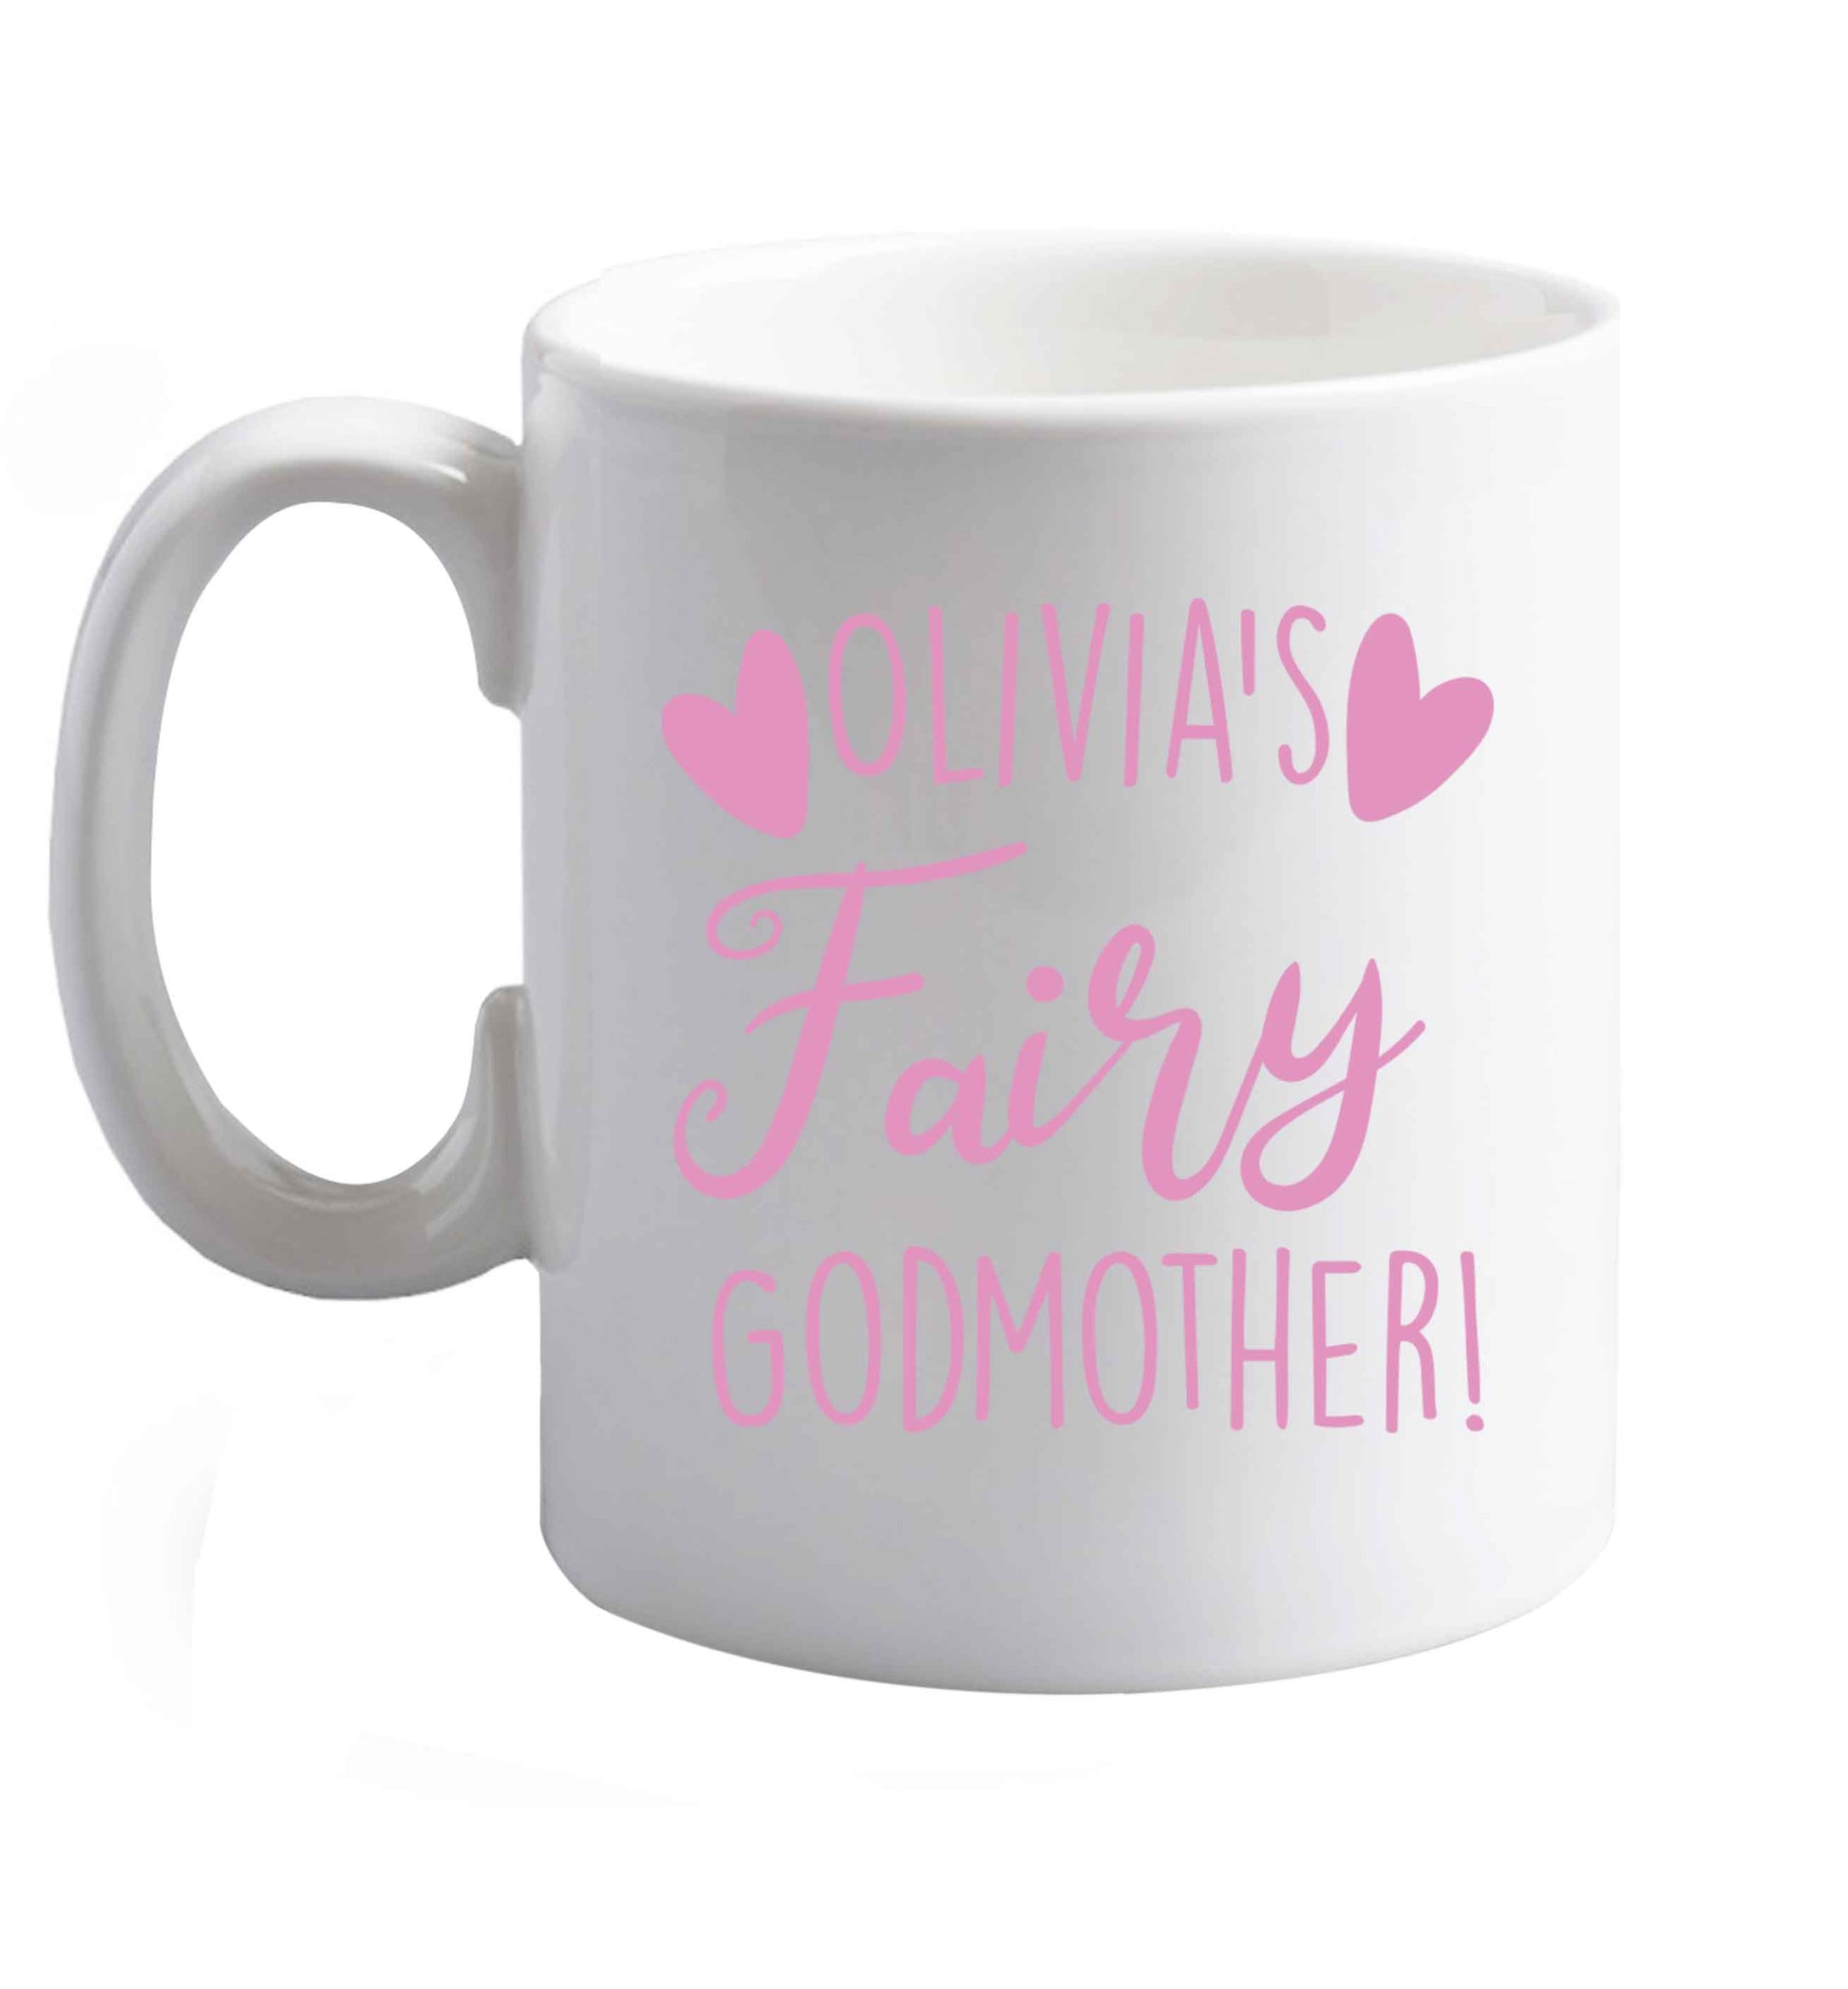 10 oz Personalised fairy Godmother  ceramic mug right handed